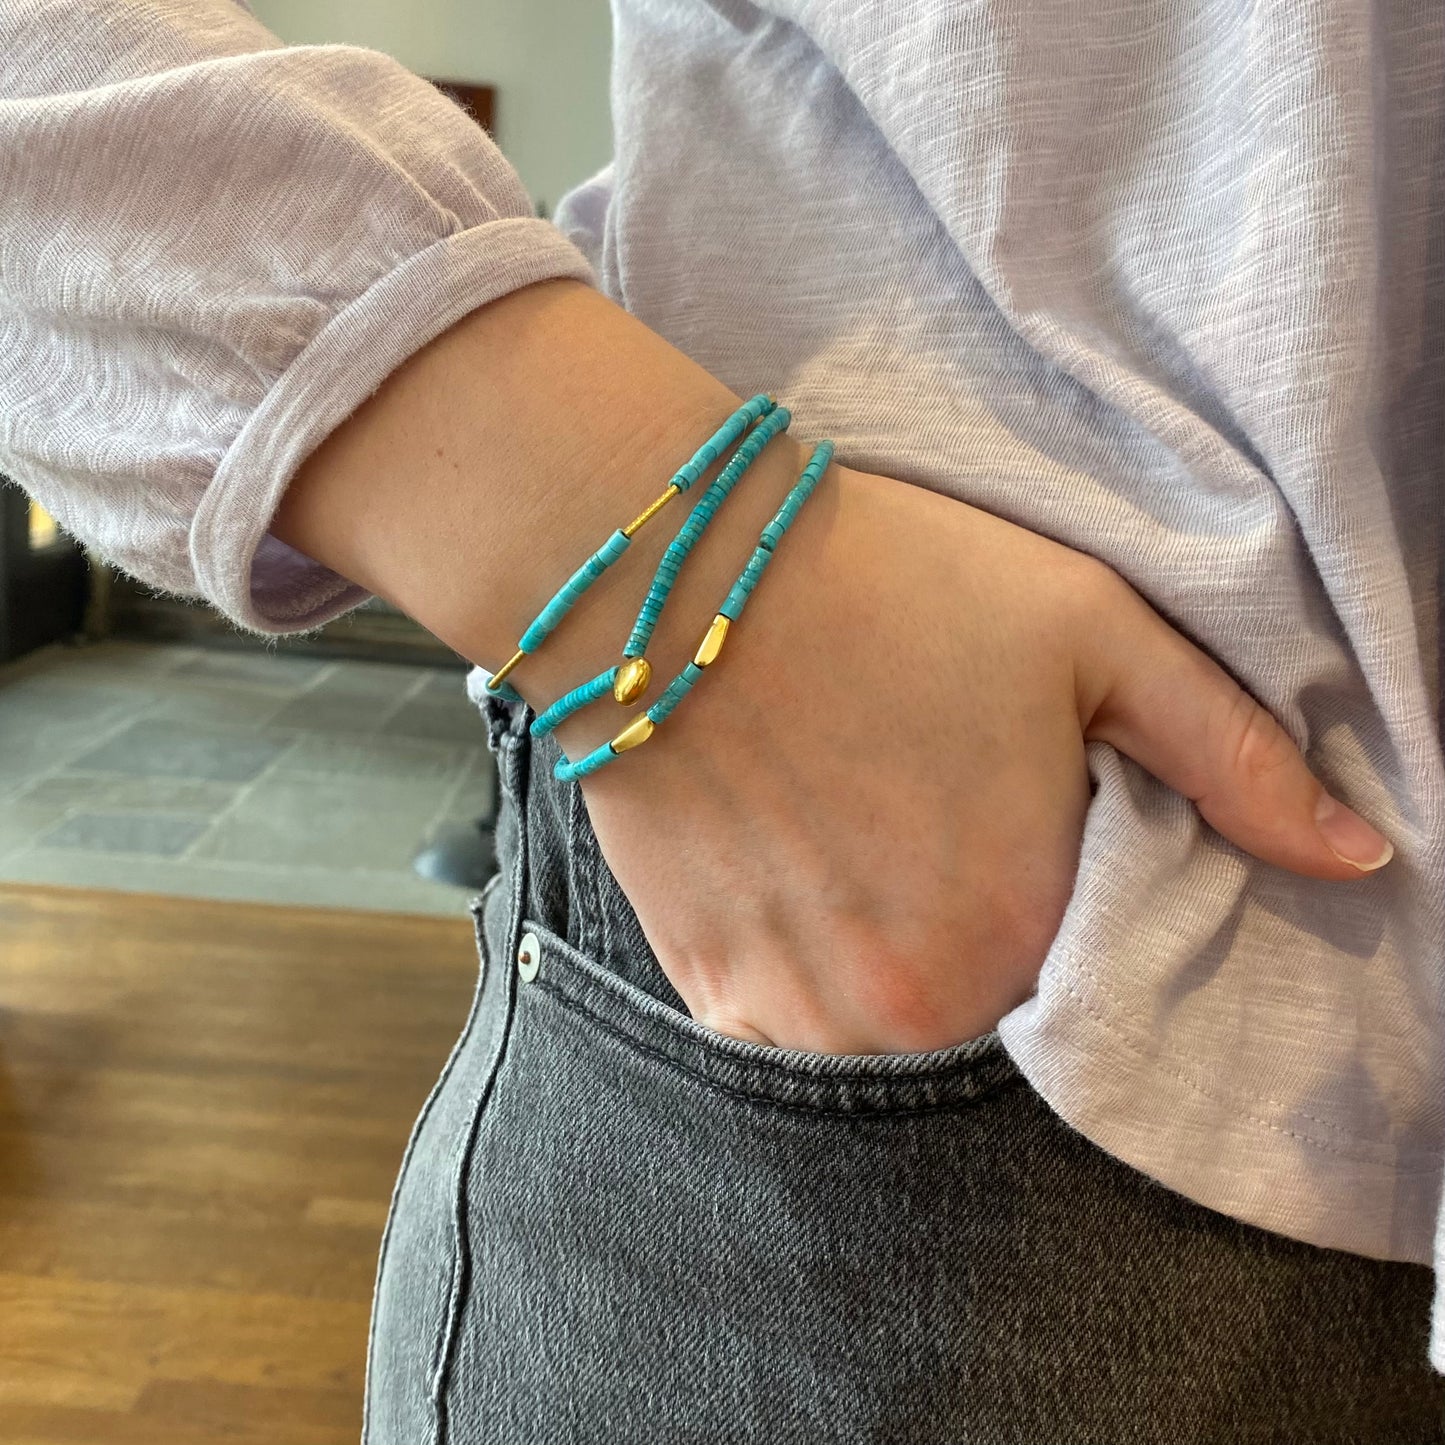 Turquoise & Gold Tubes Stretch Bracelet